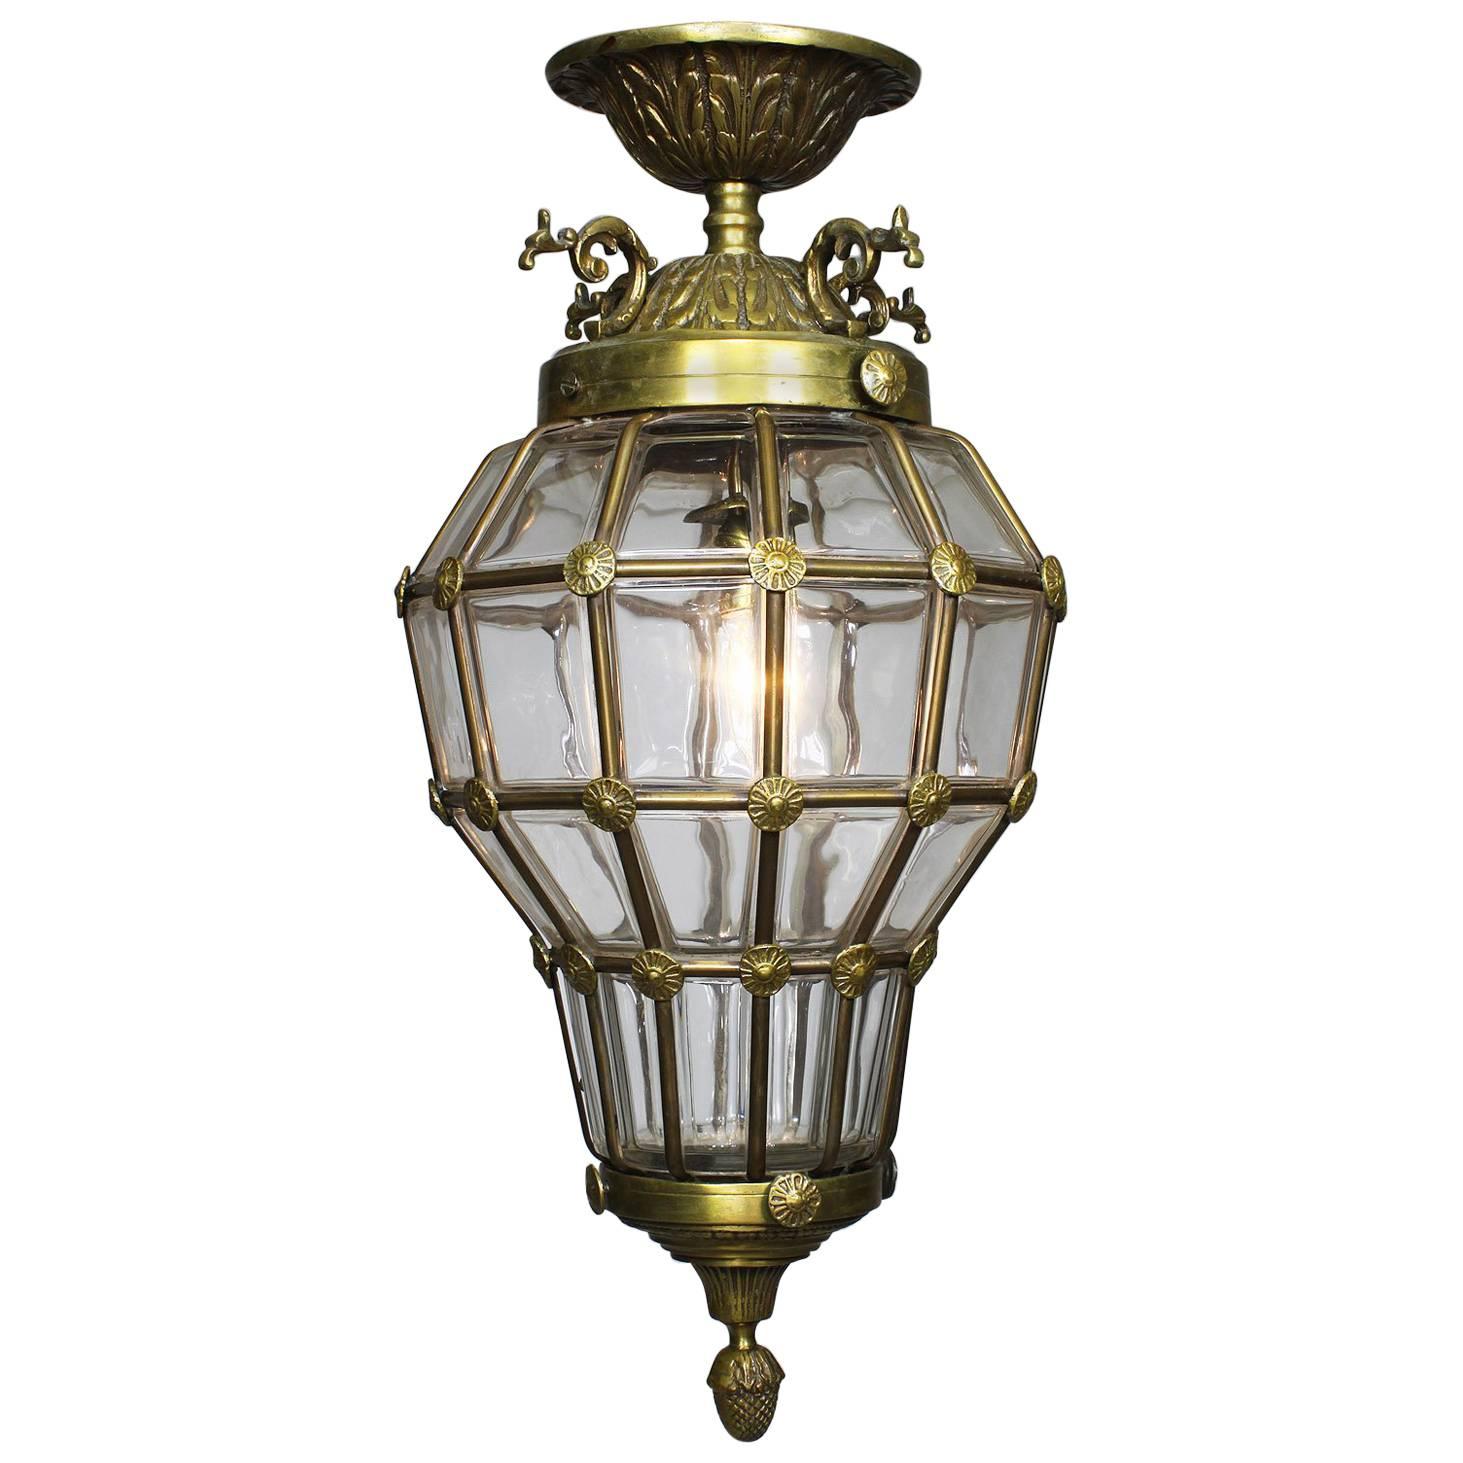 French Mid-20th Century Louis XIV Style Gilt-Metal & Glass "Versailles" Lantern